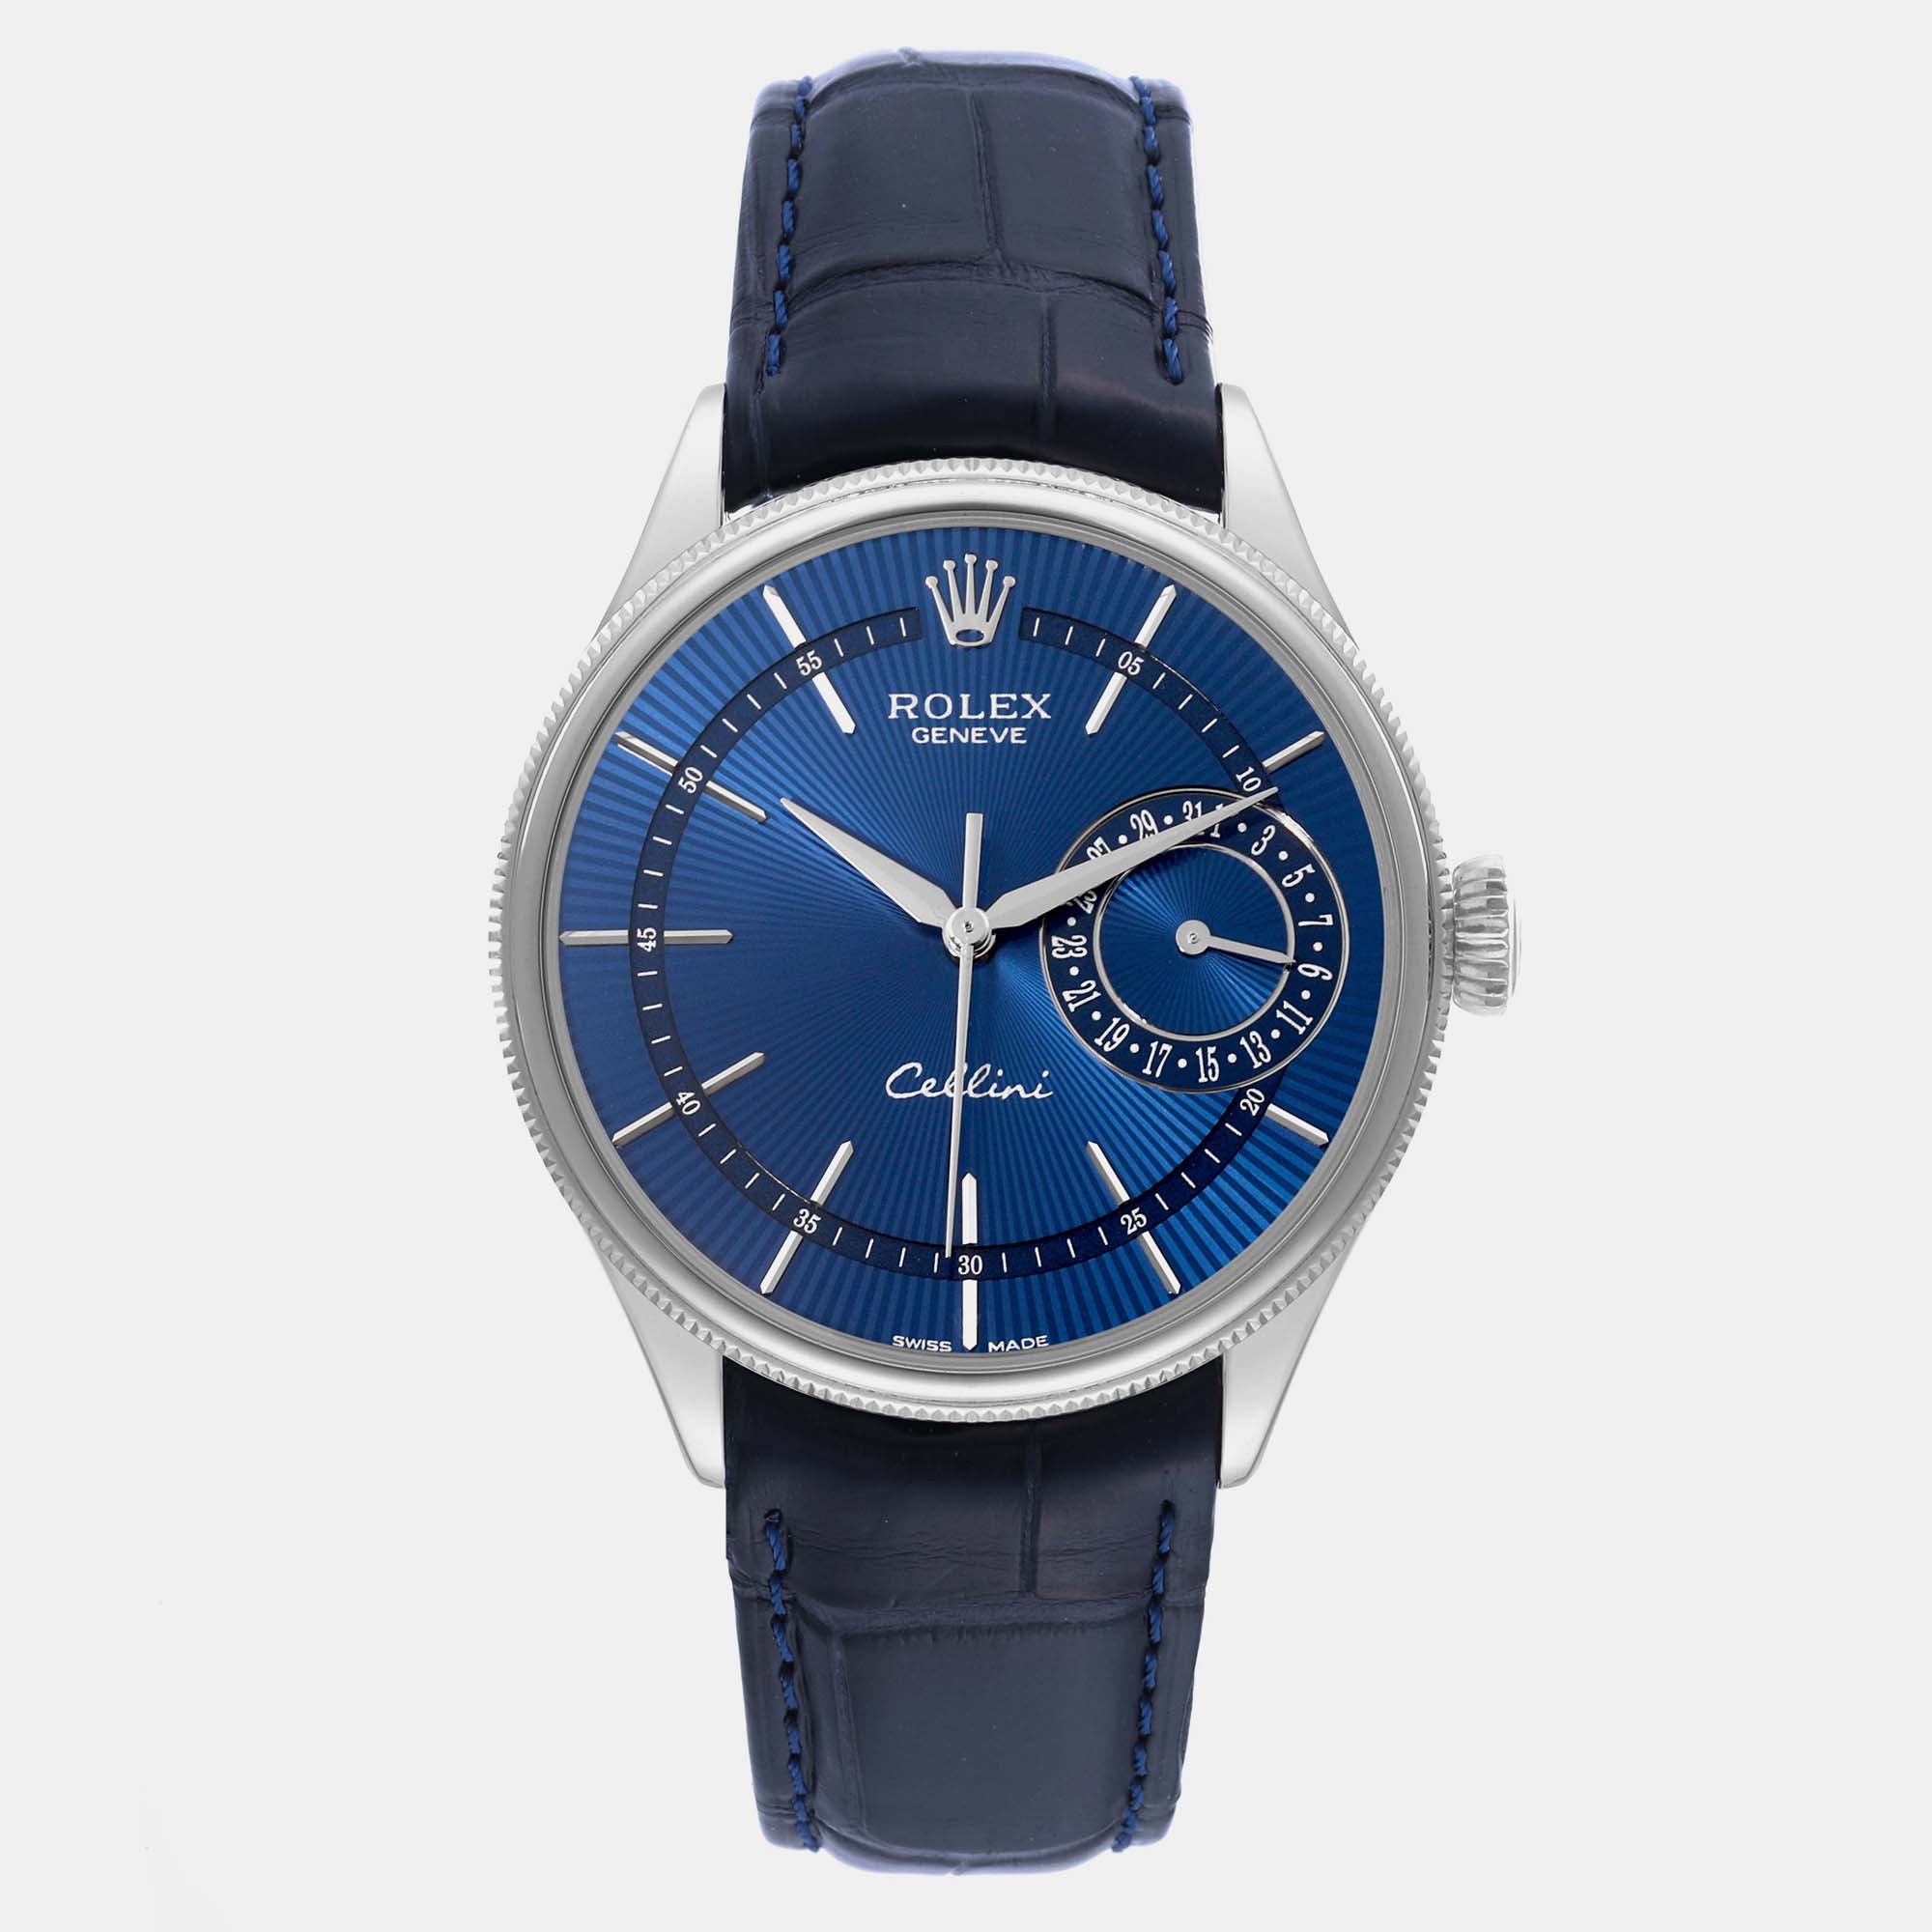 Rolex cellini date white gold blue dial men's watch 39 mm